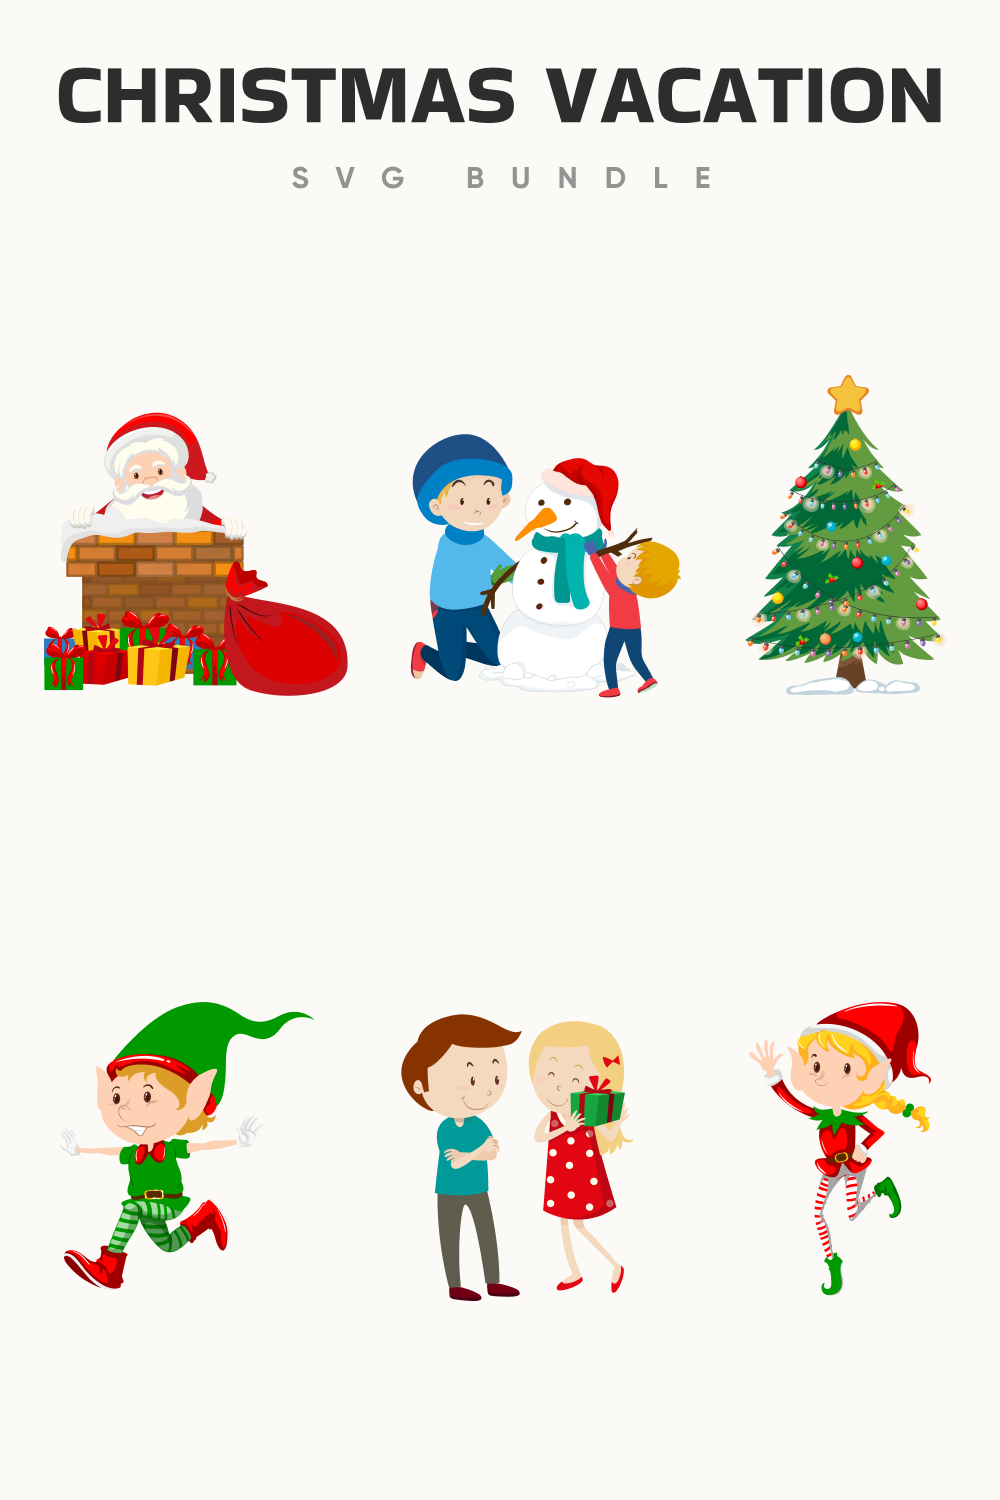 Happy Christmas illustrations for festive mood.